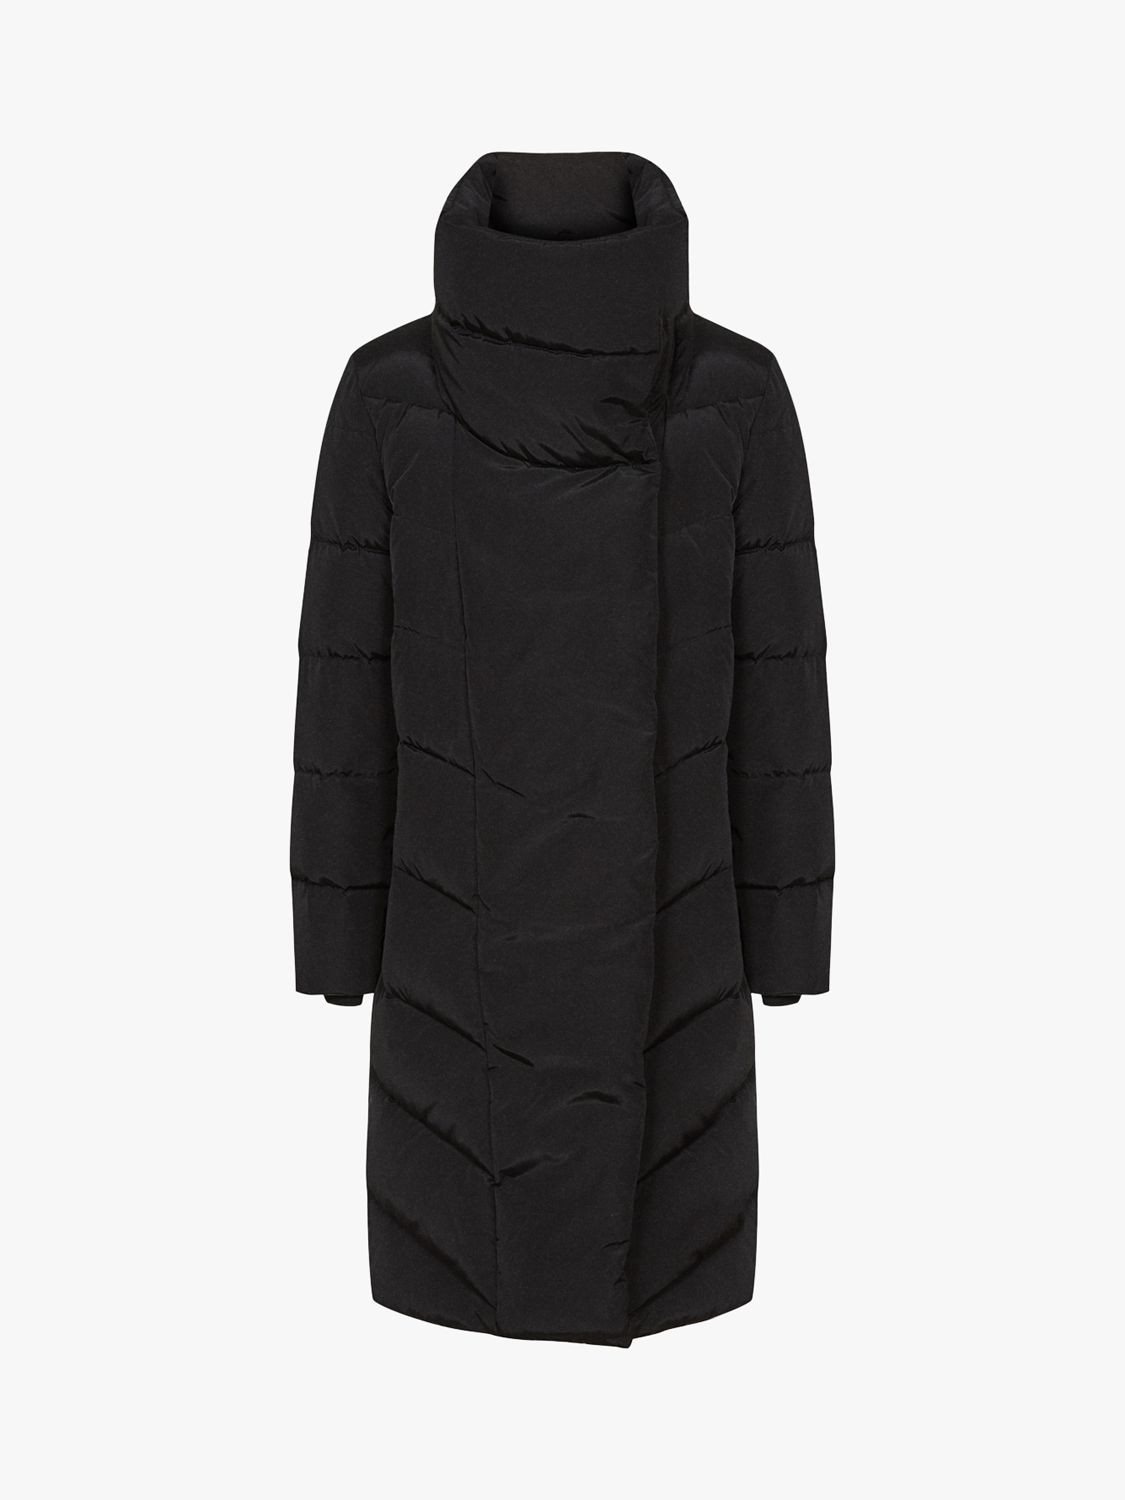 Reiss Lora Puffer Coat, Black at John Lewis & Partners